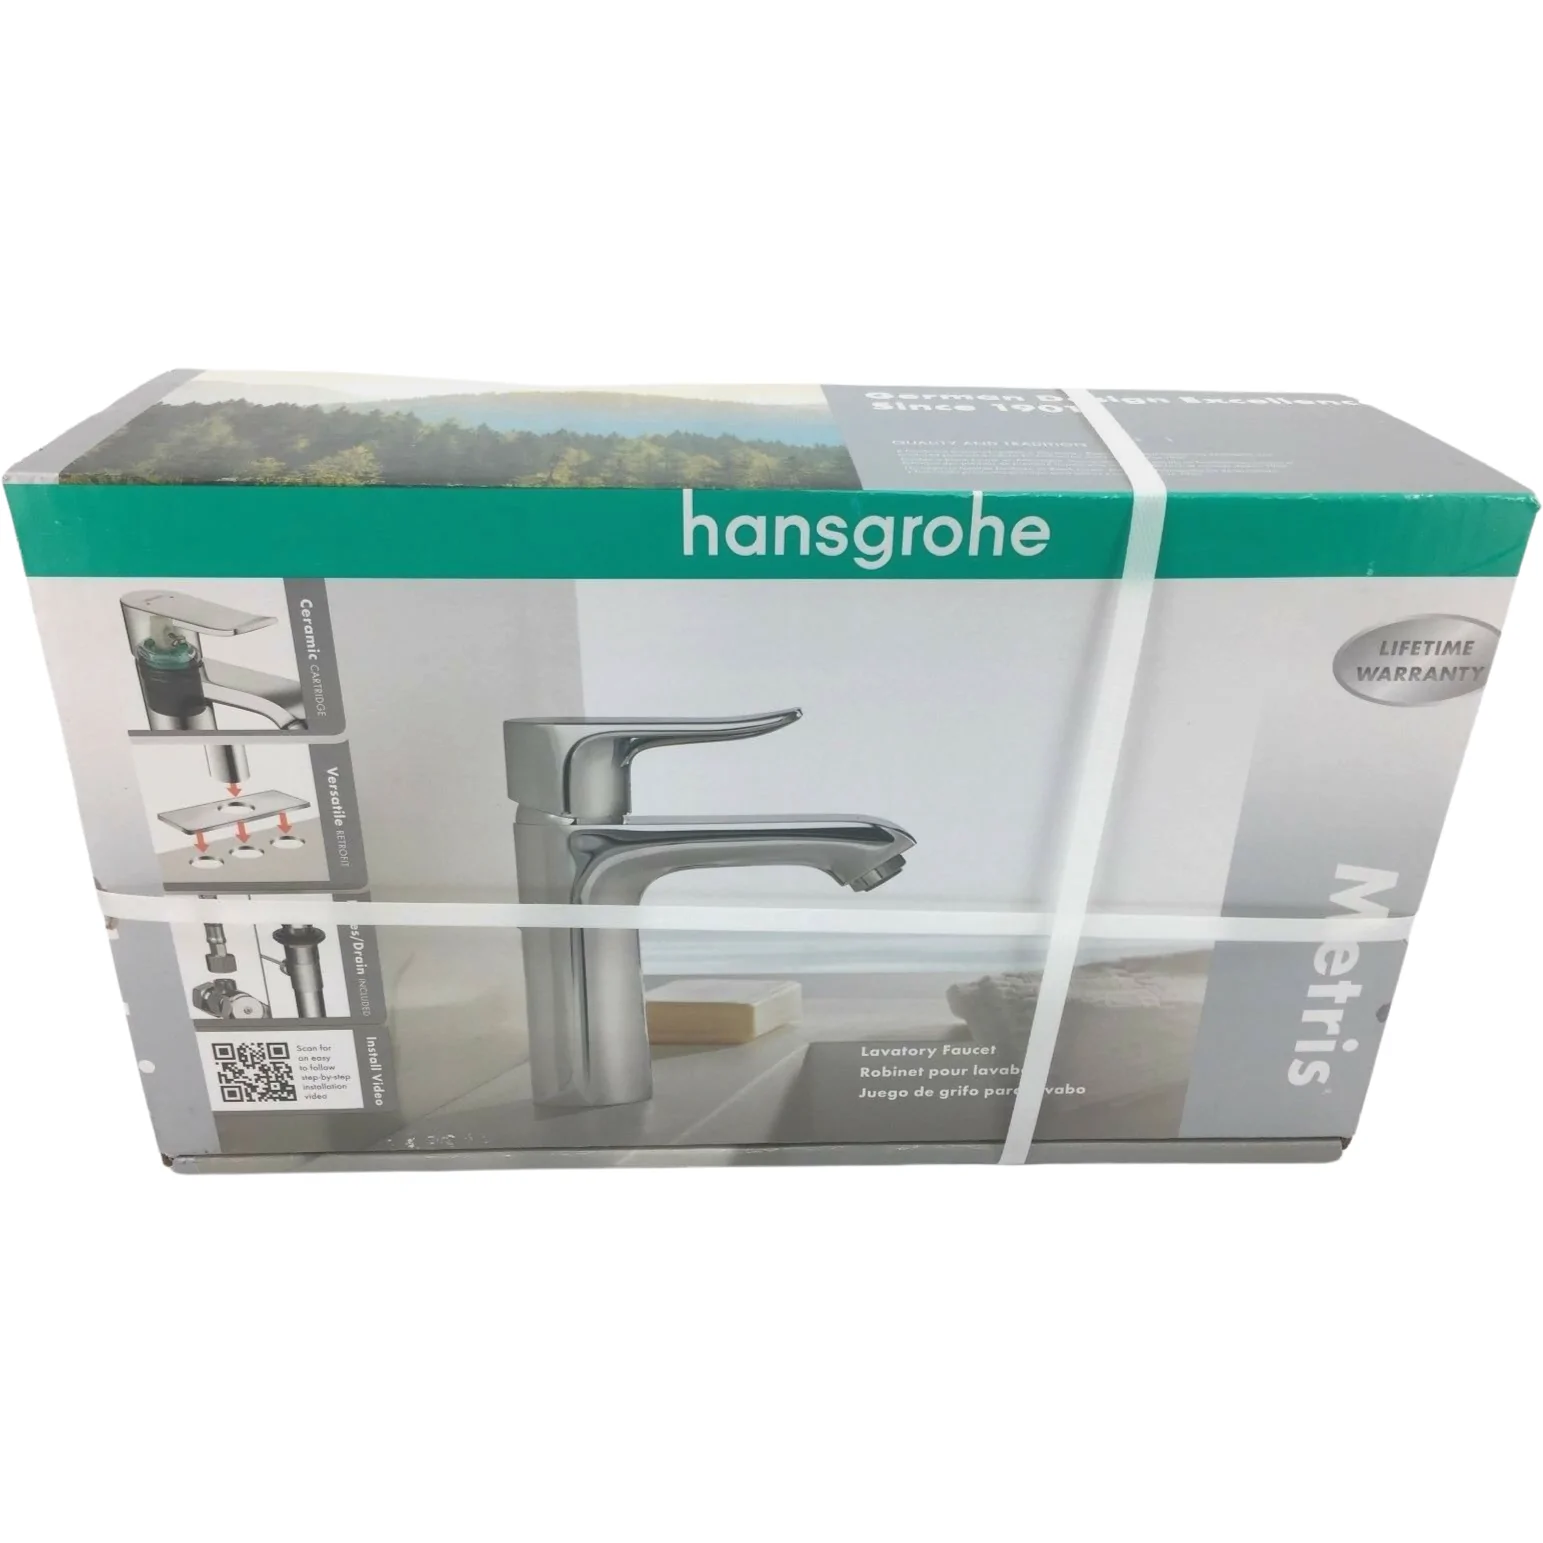 Hansgrohe Bathroom Faucet / Metris / Ceramic Cartridge / Chrome